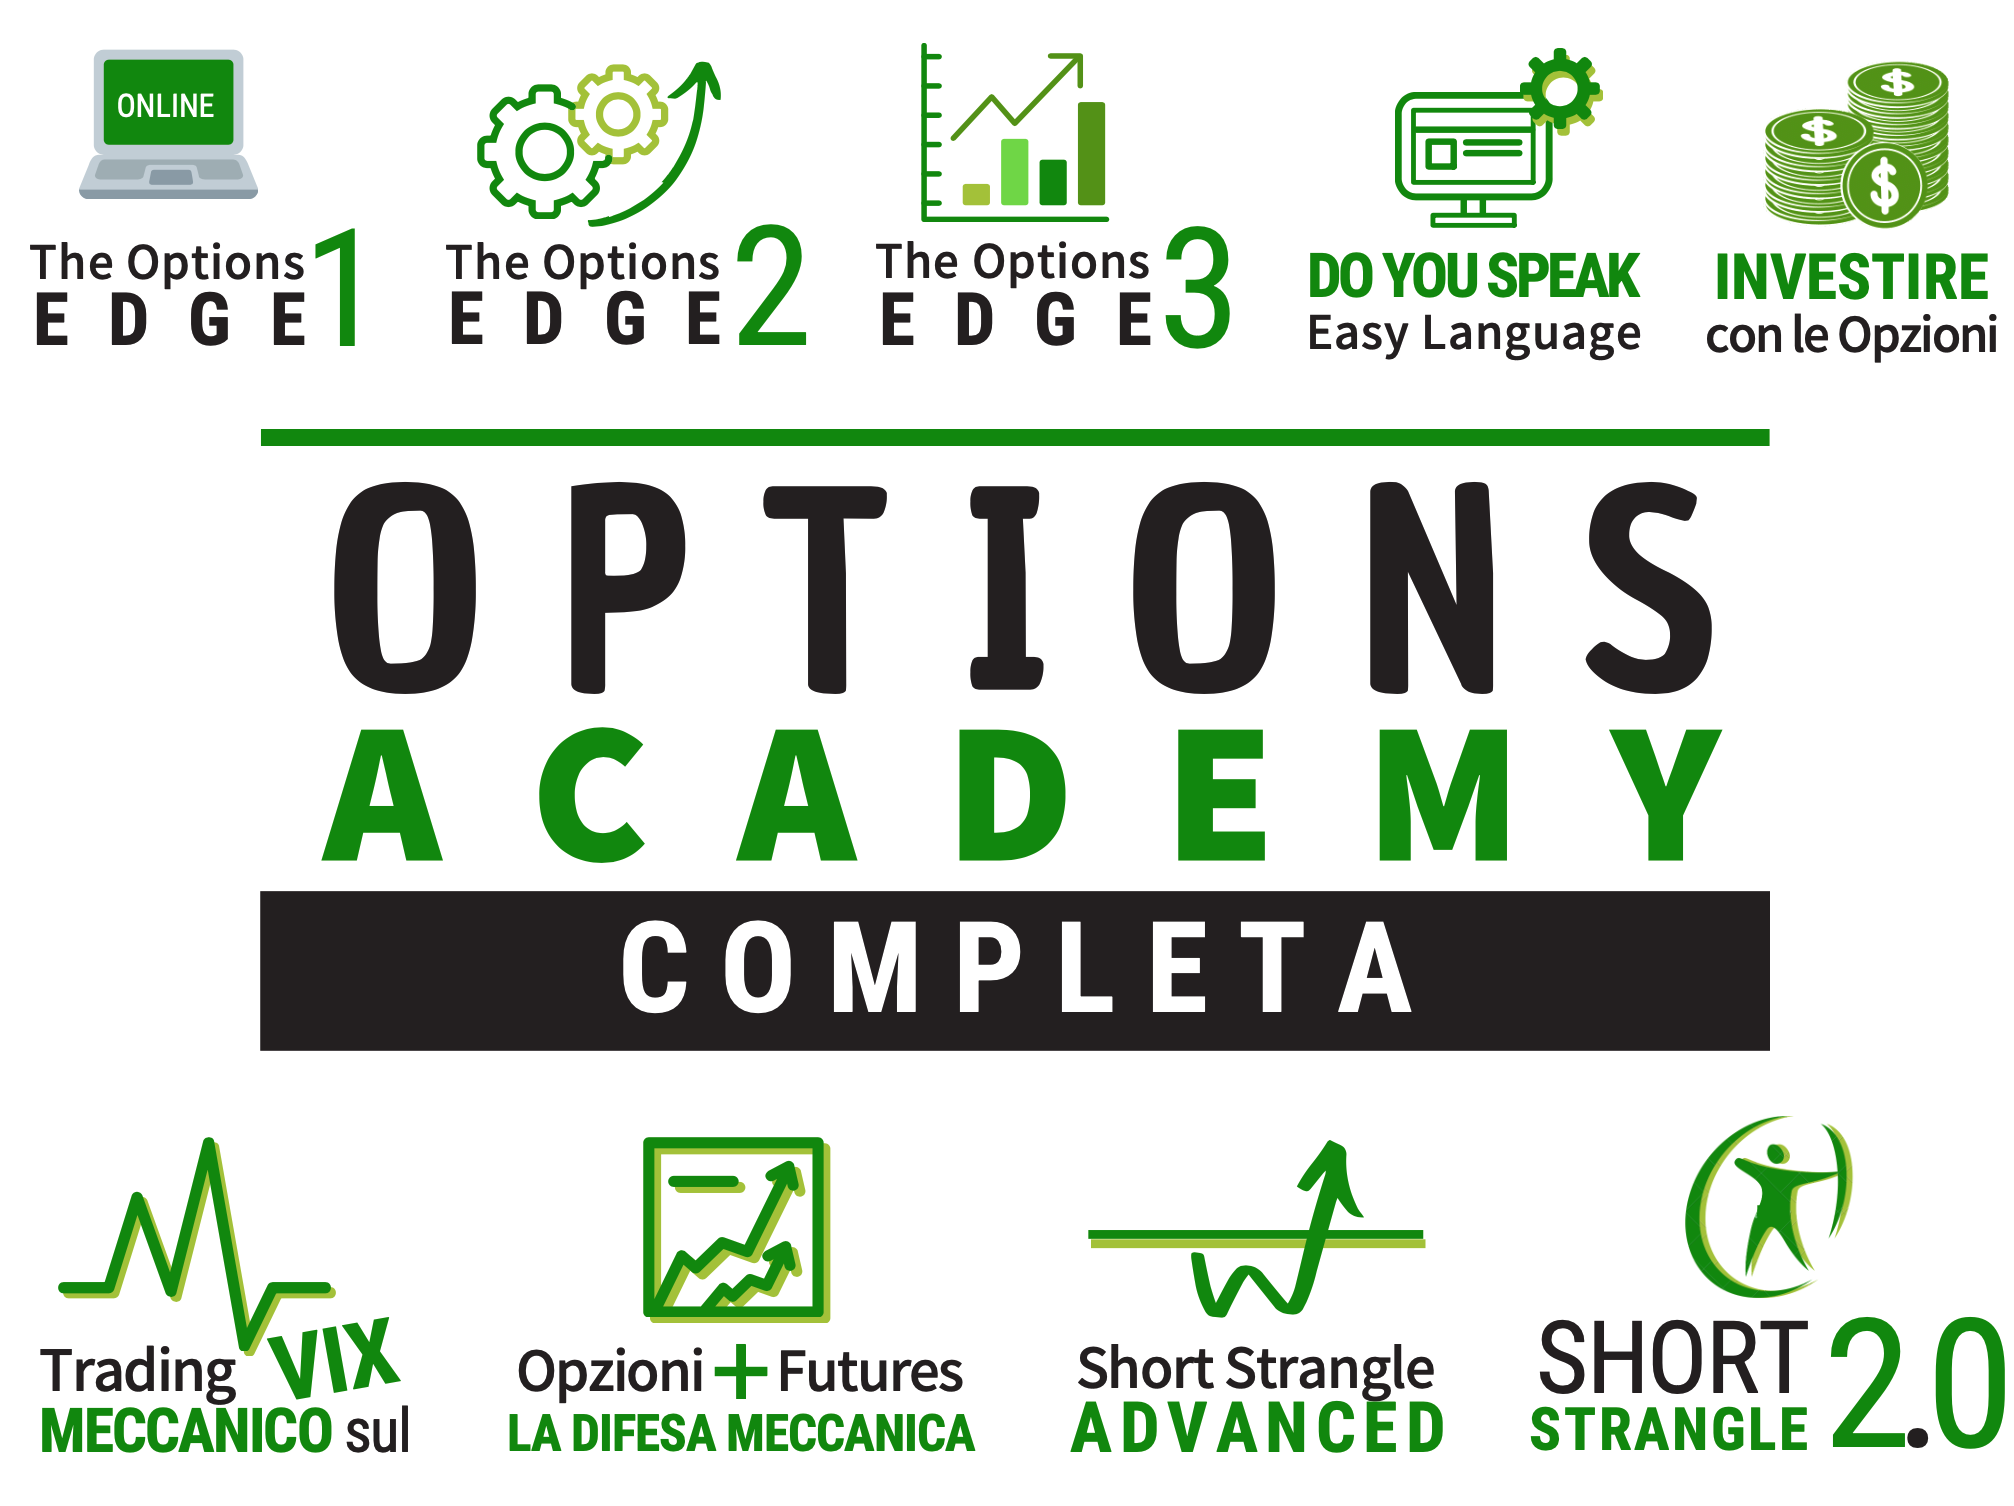 qtlab corsi trading Options Academy